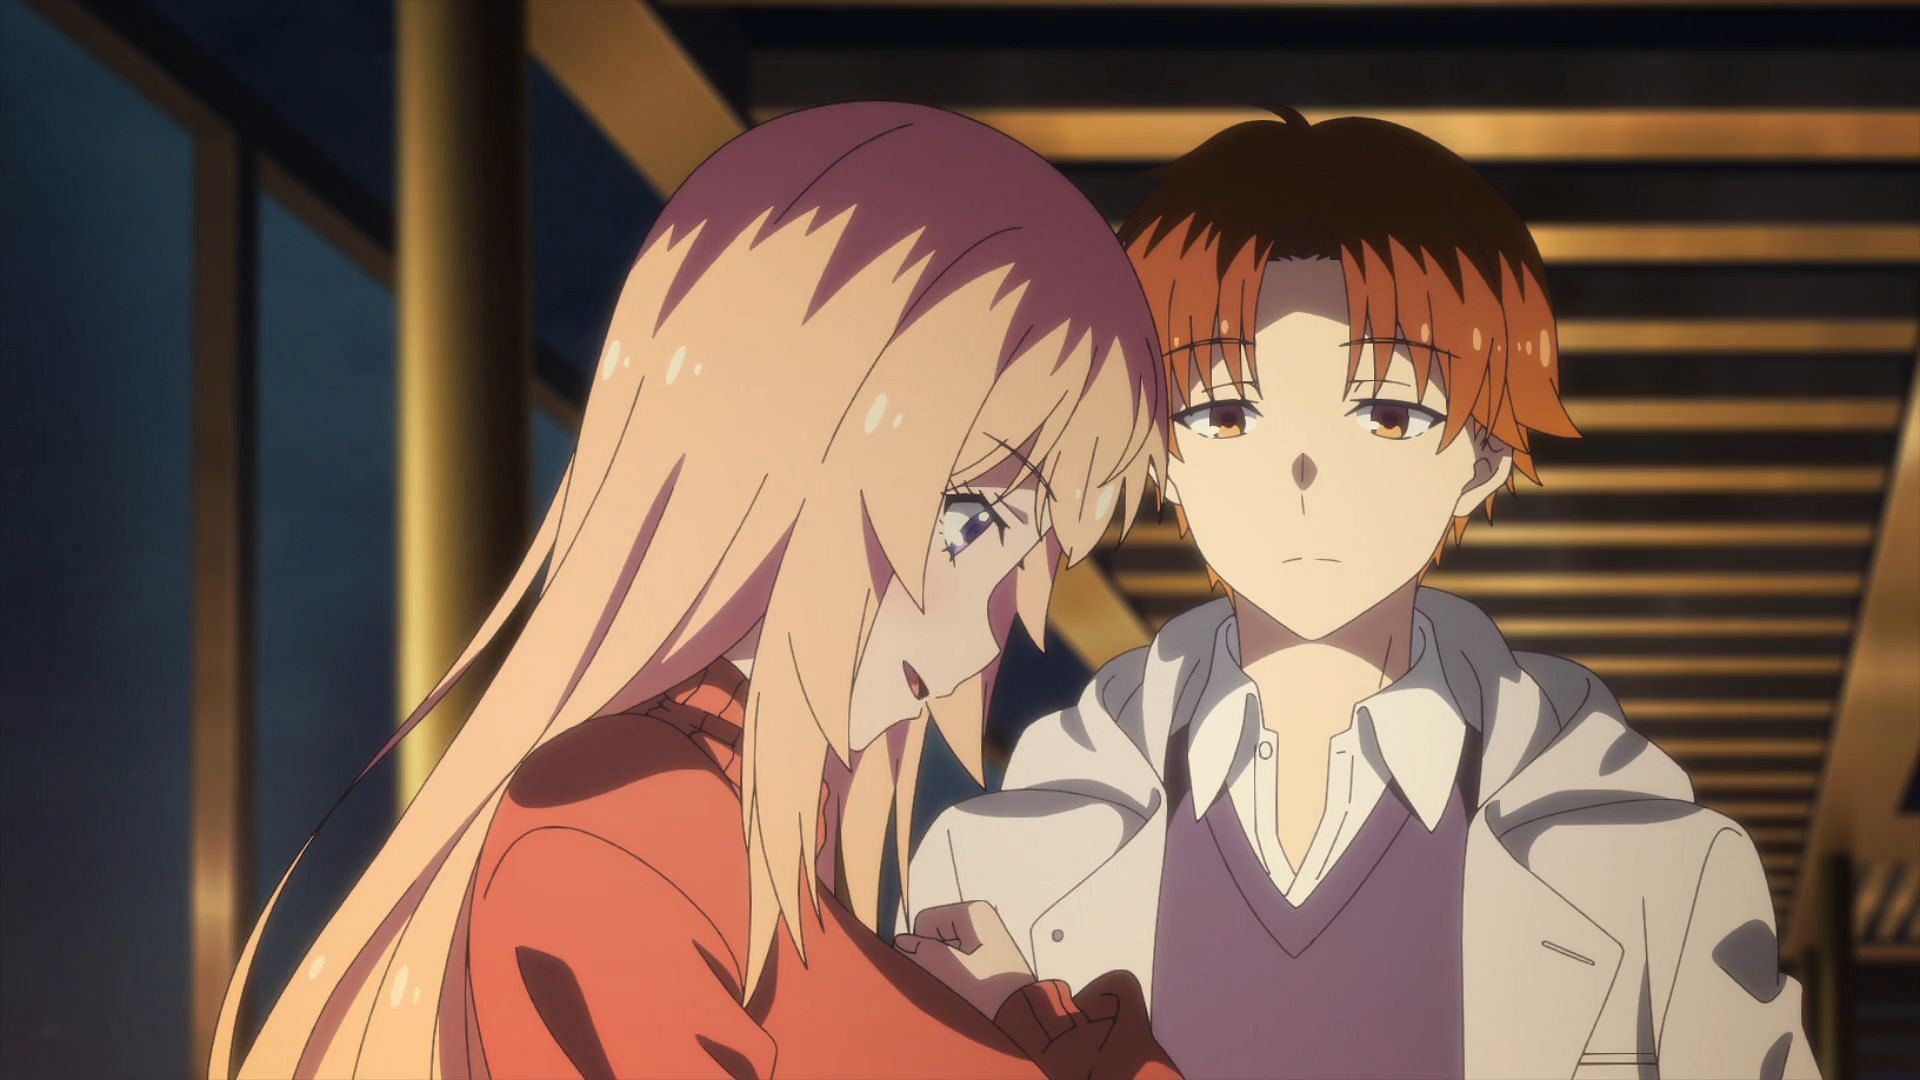 Ichinose and Kiyotaka, as seen in Classroom of the Elite Season 3 Episode 3 (Image via Lerche)